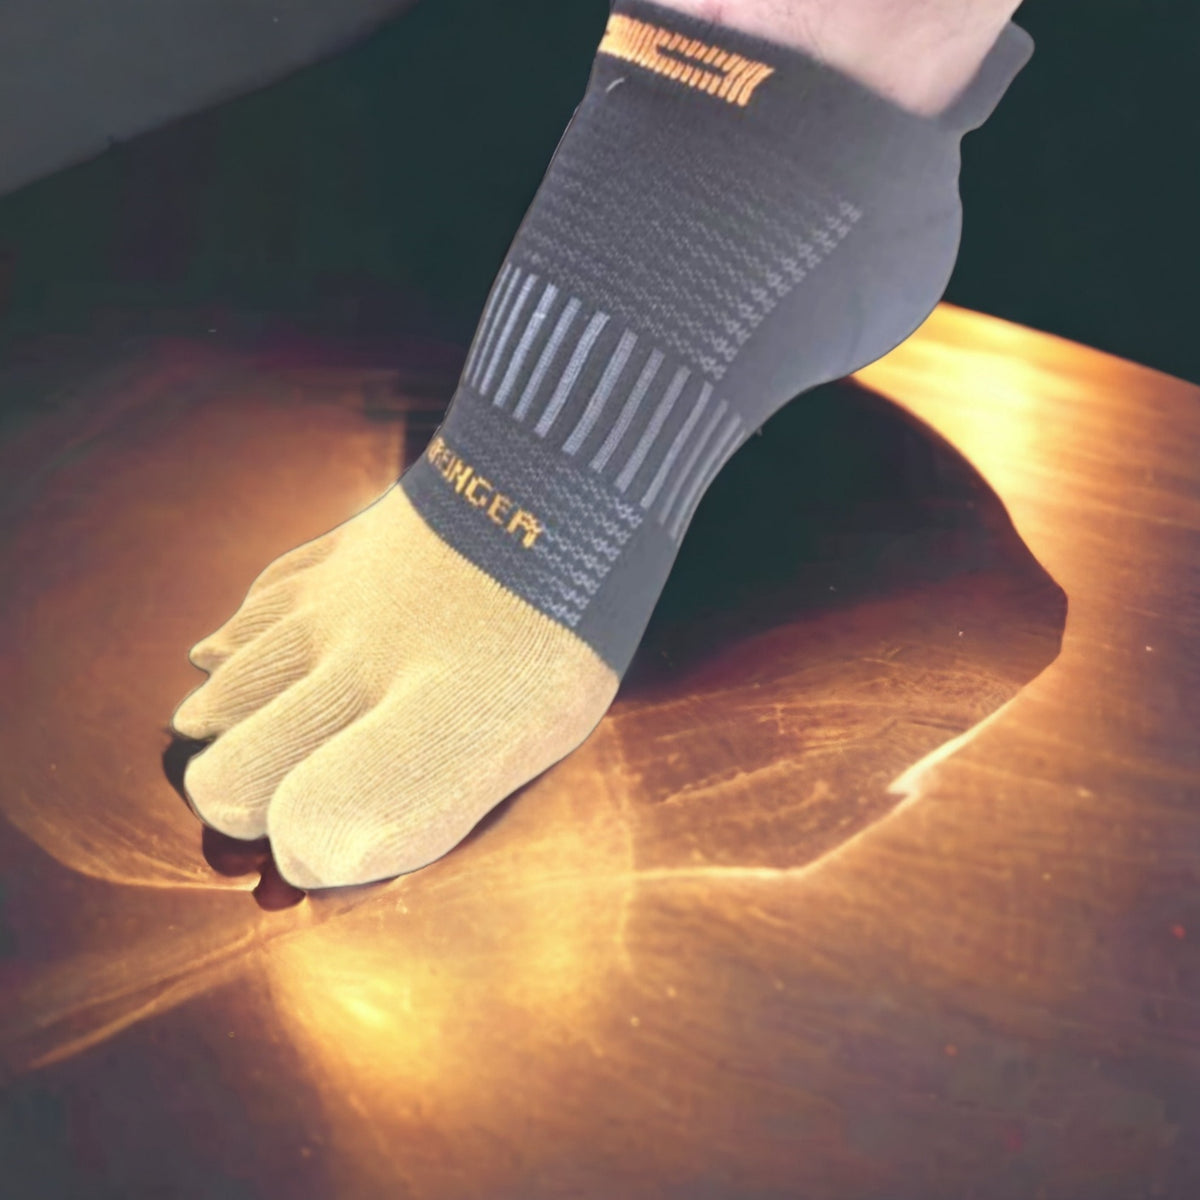 COES™  Antifungal Socks 45% Copper Infused Toes Fight Foot Fungus